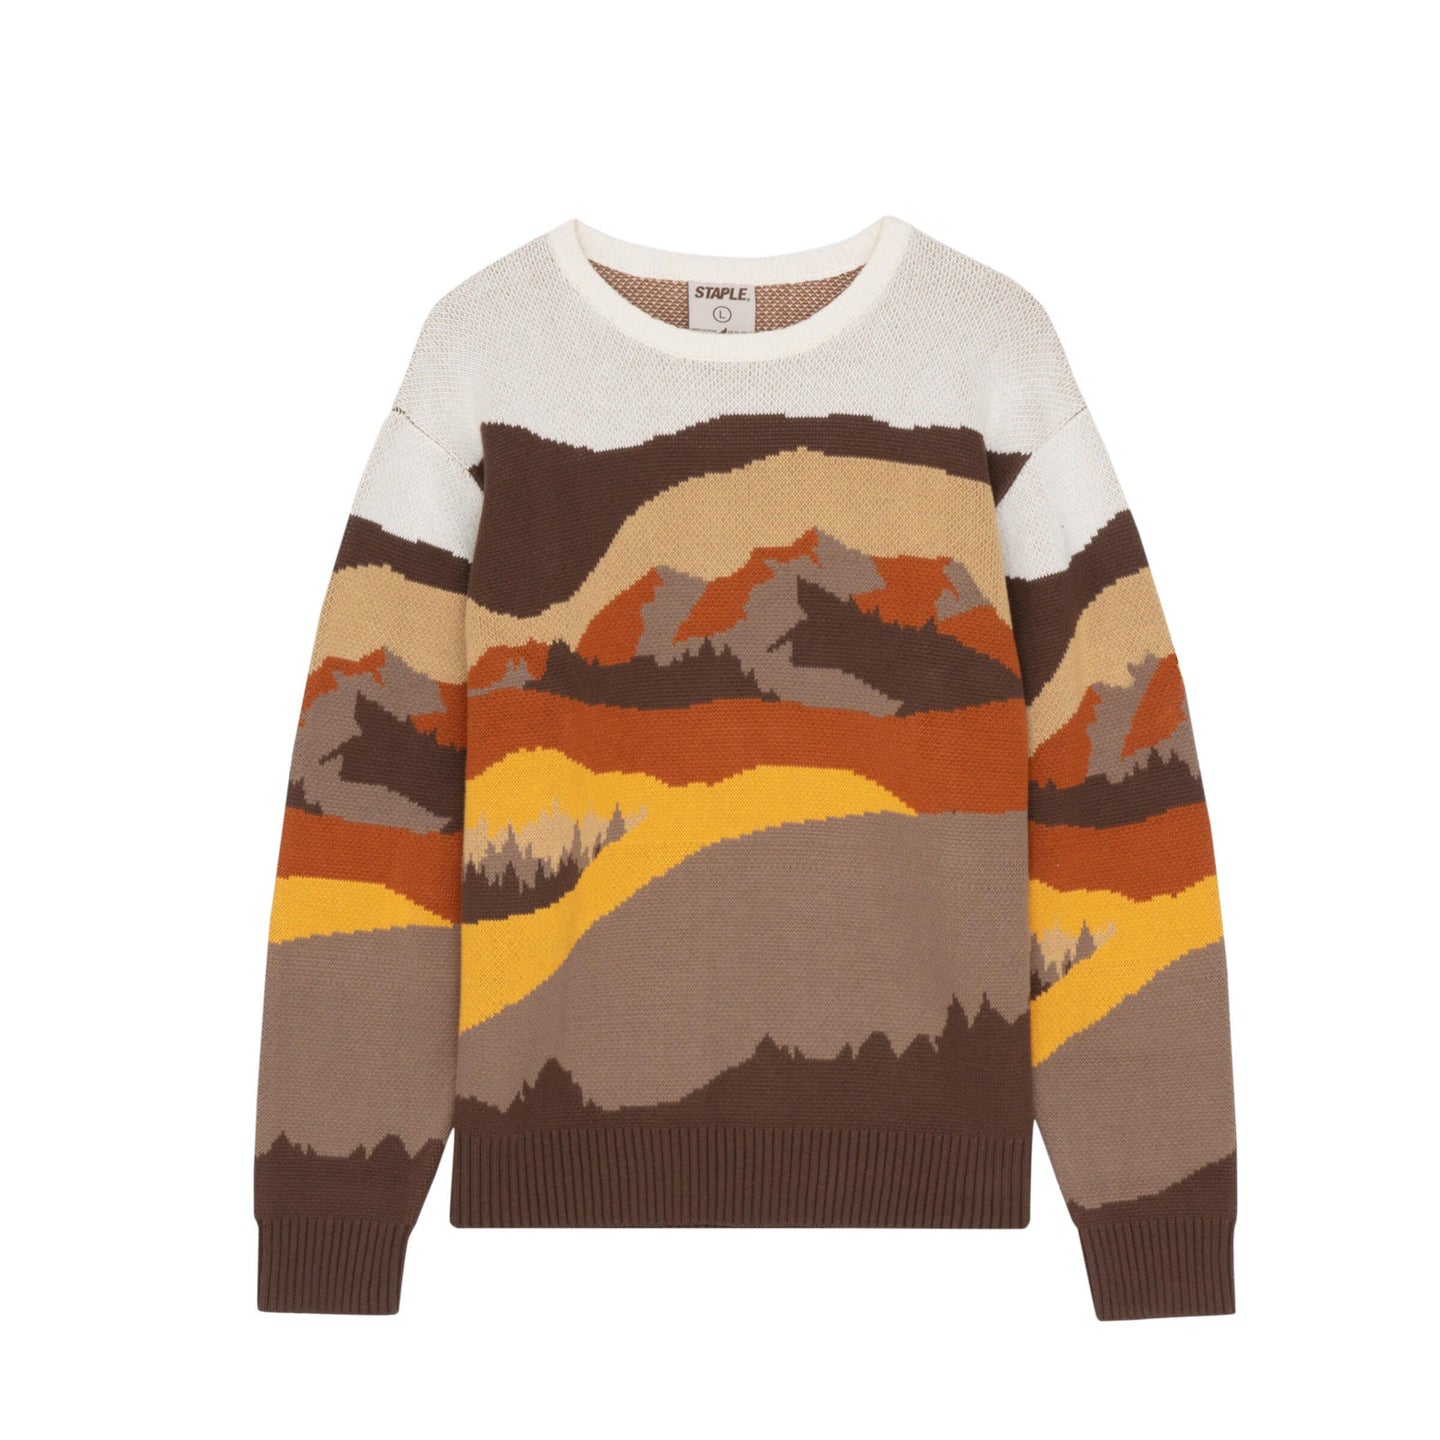 Staple Landscape Sweater